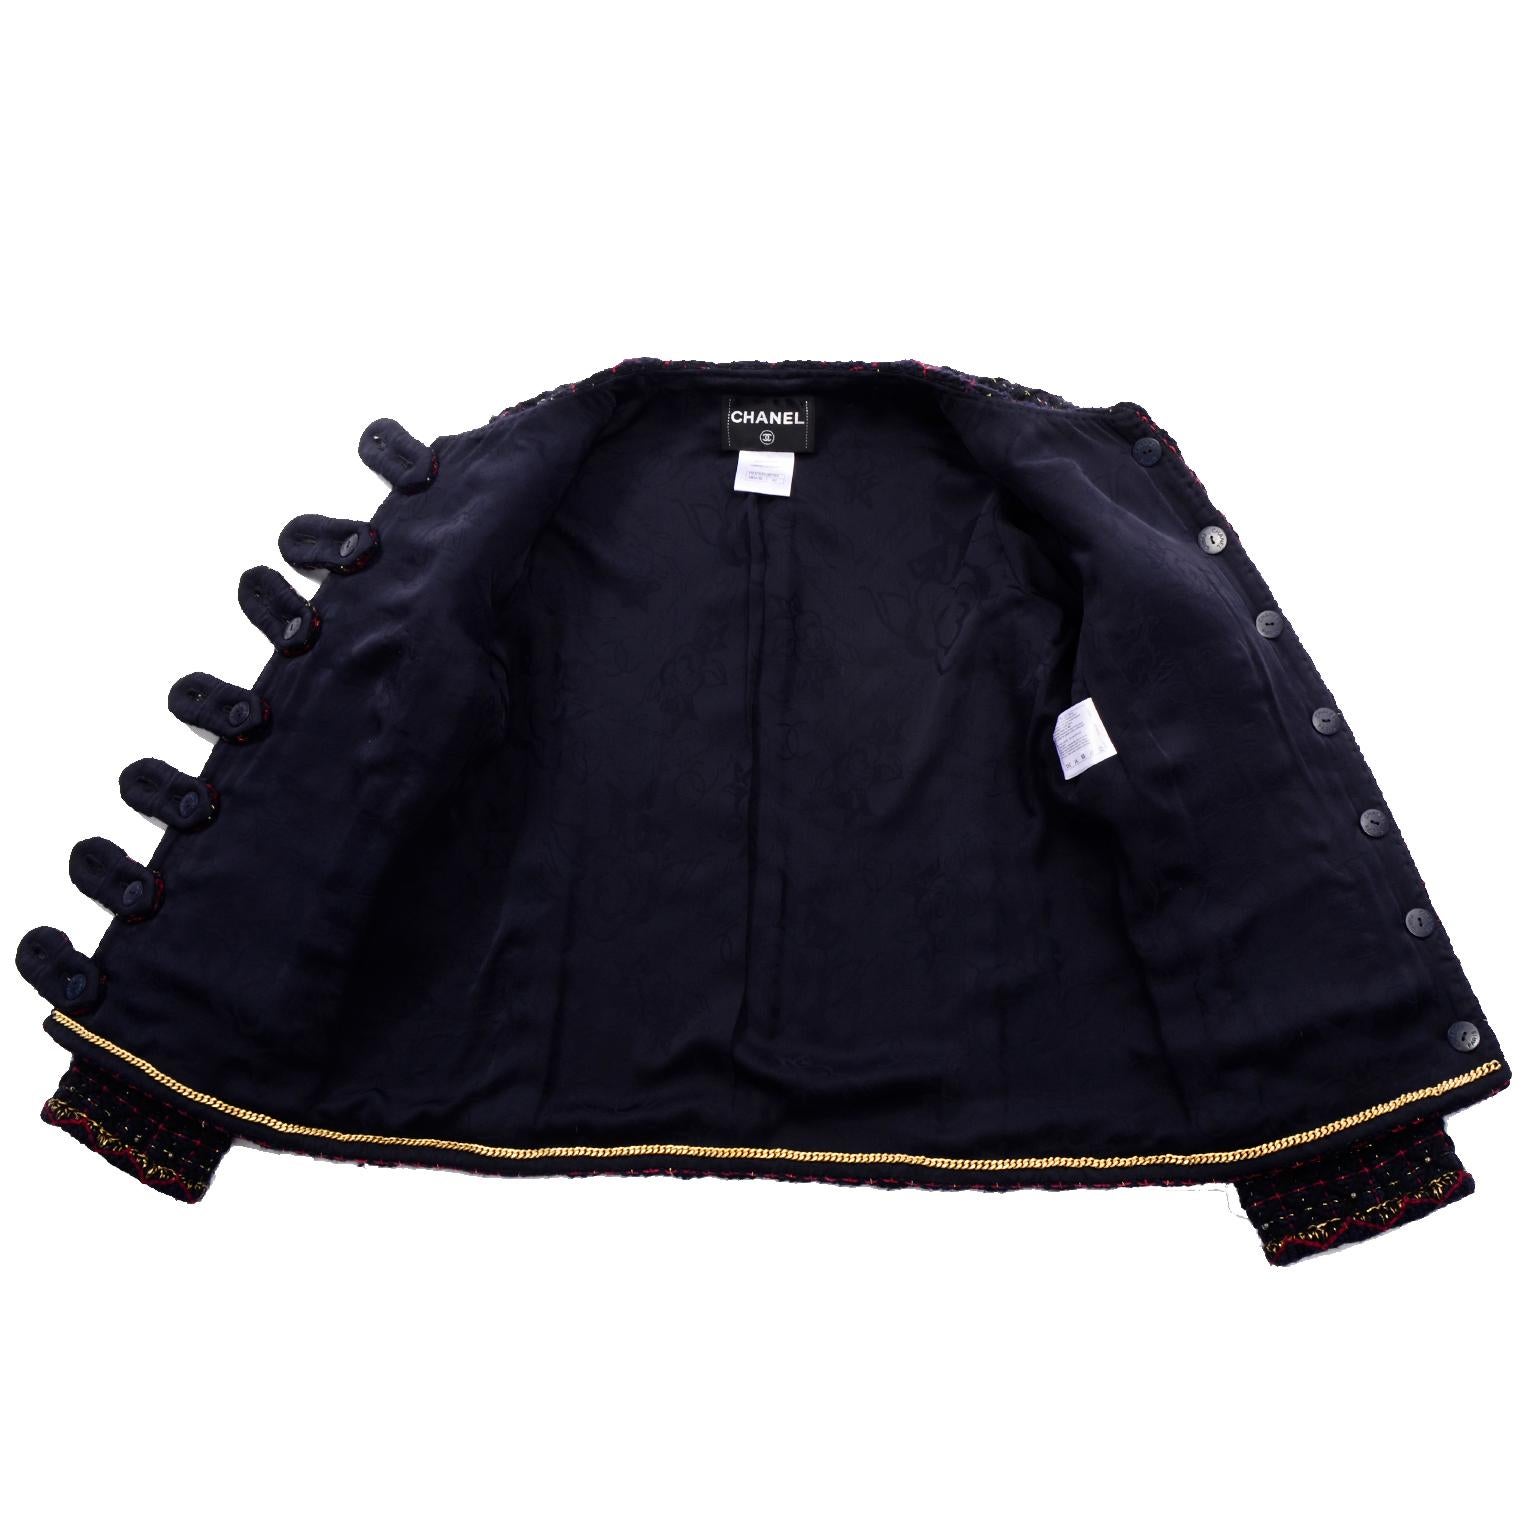 Chanel 2015 Paris Salzburg Collection $14250 Tweed Documented Runway Jacket 8